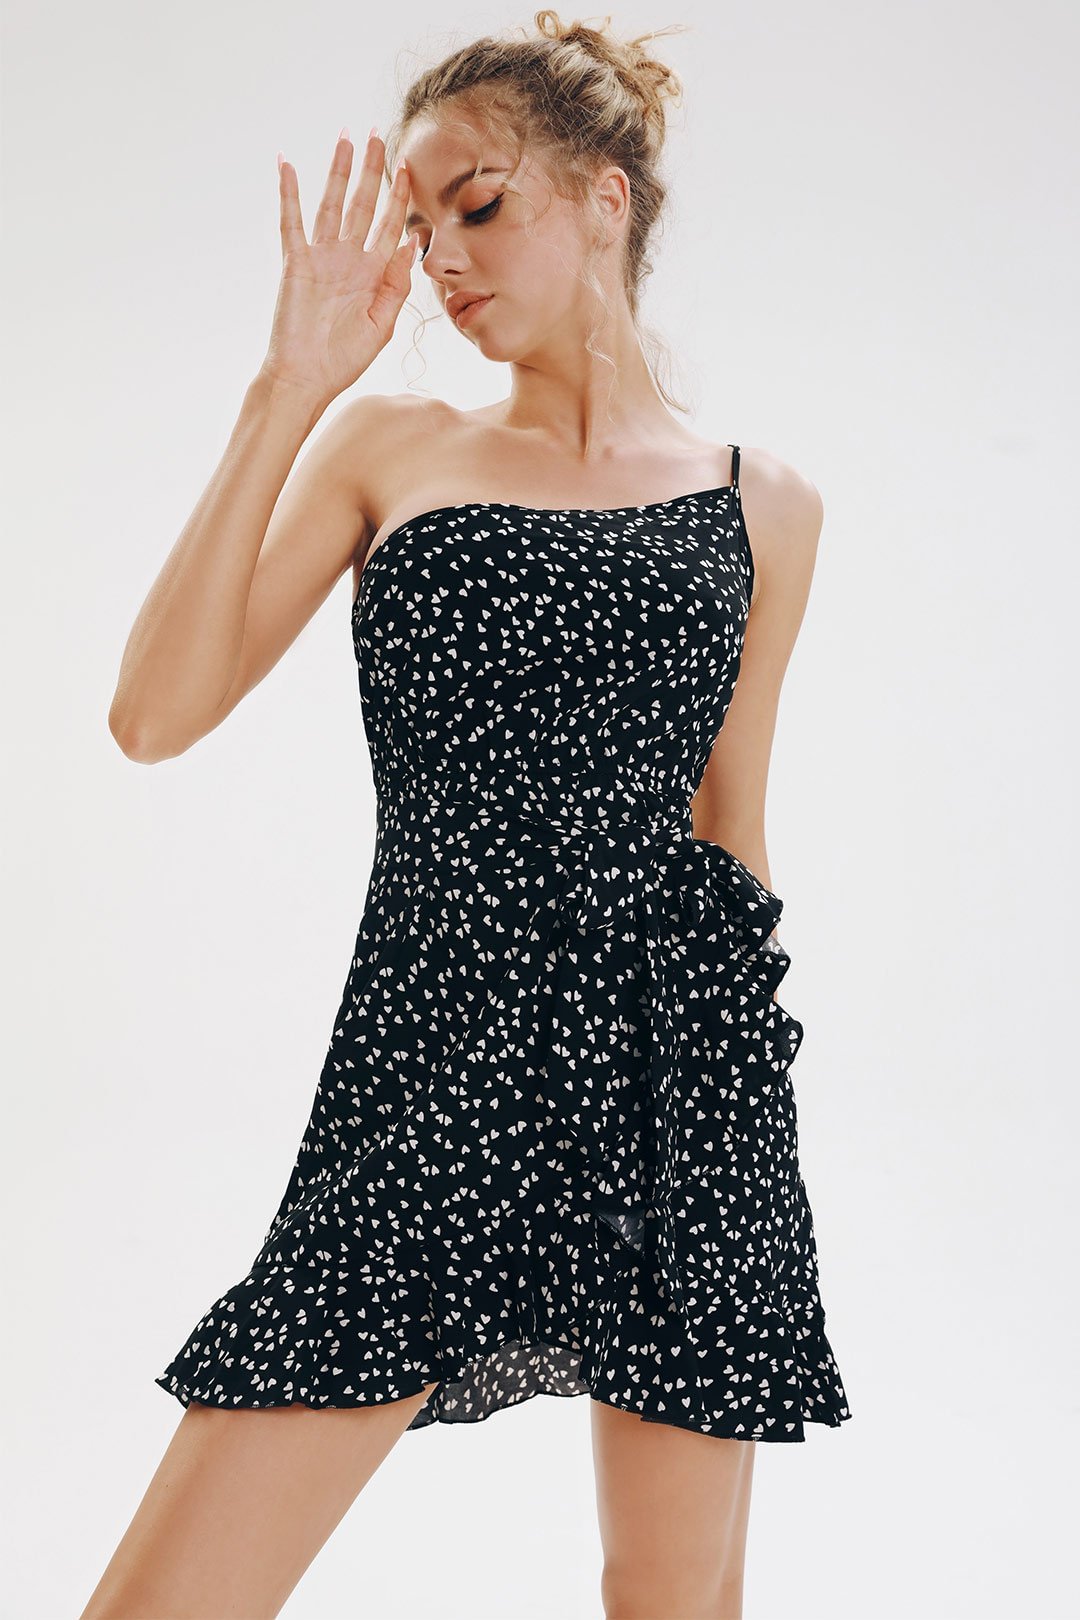 Fashionv-One-shoulder Ruffle Mini Dress